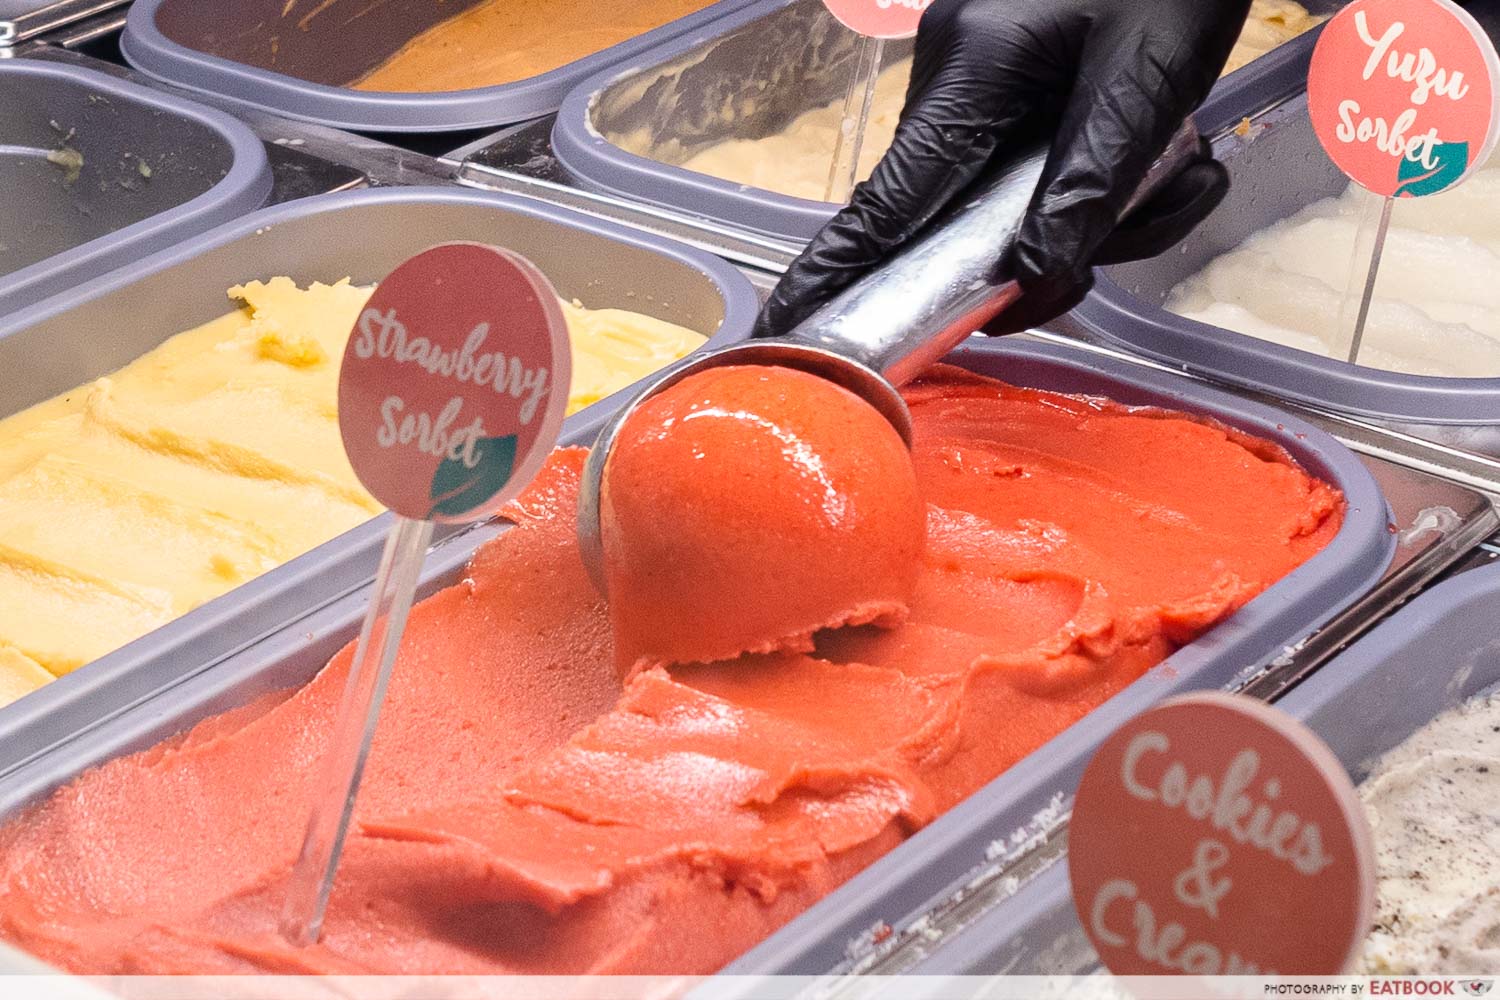 softhaus - scooping ice cream